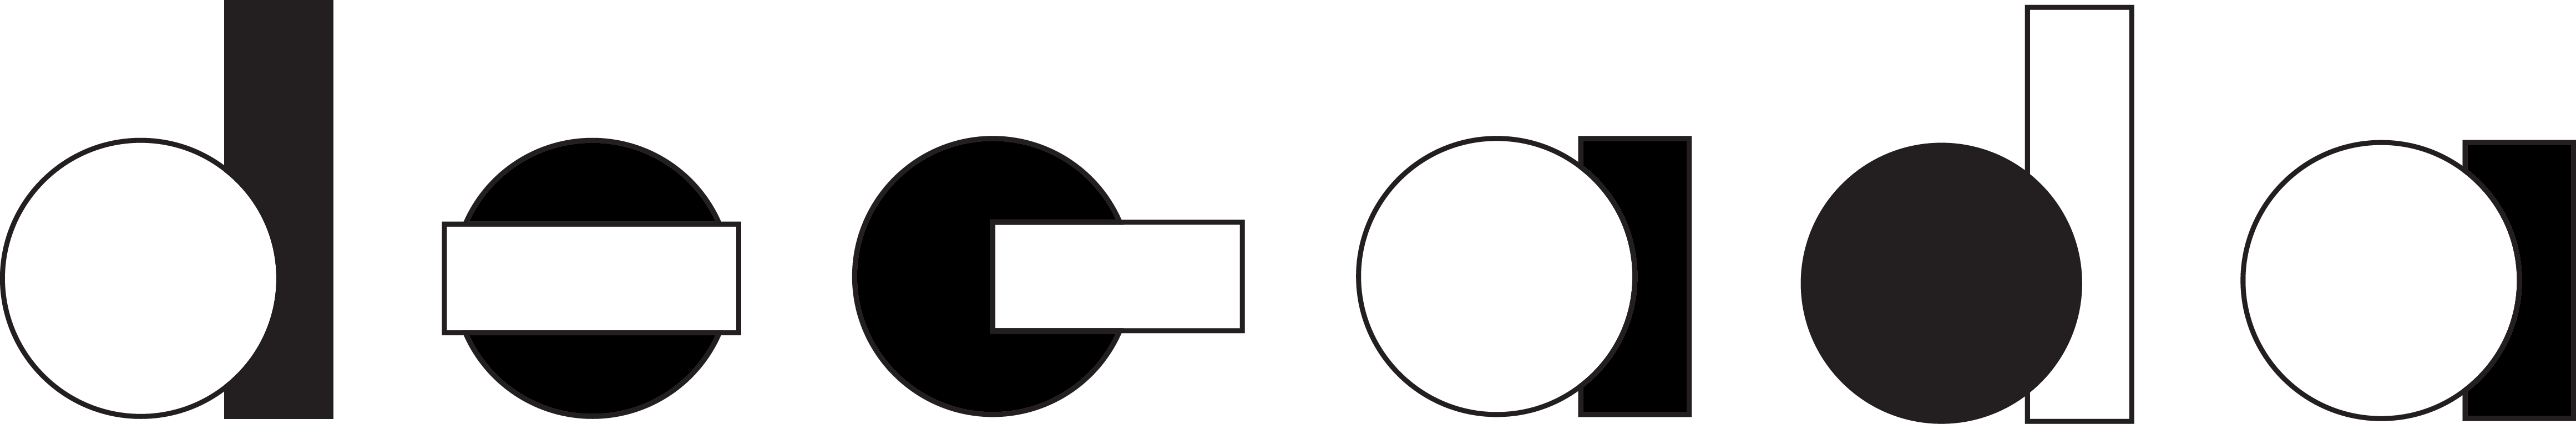 Horizontal-t - Circle (4643x765)